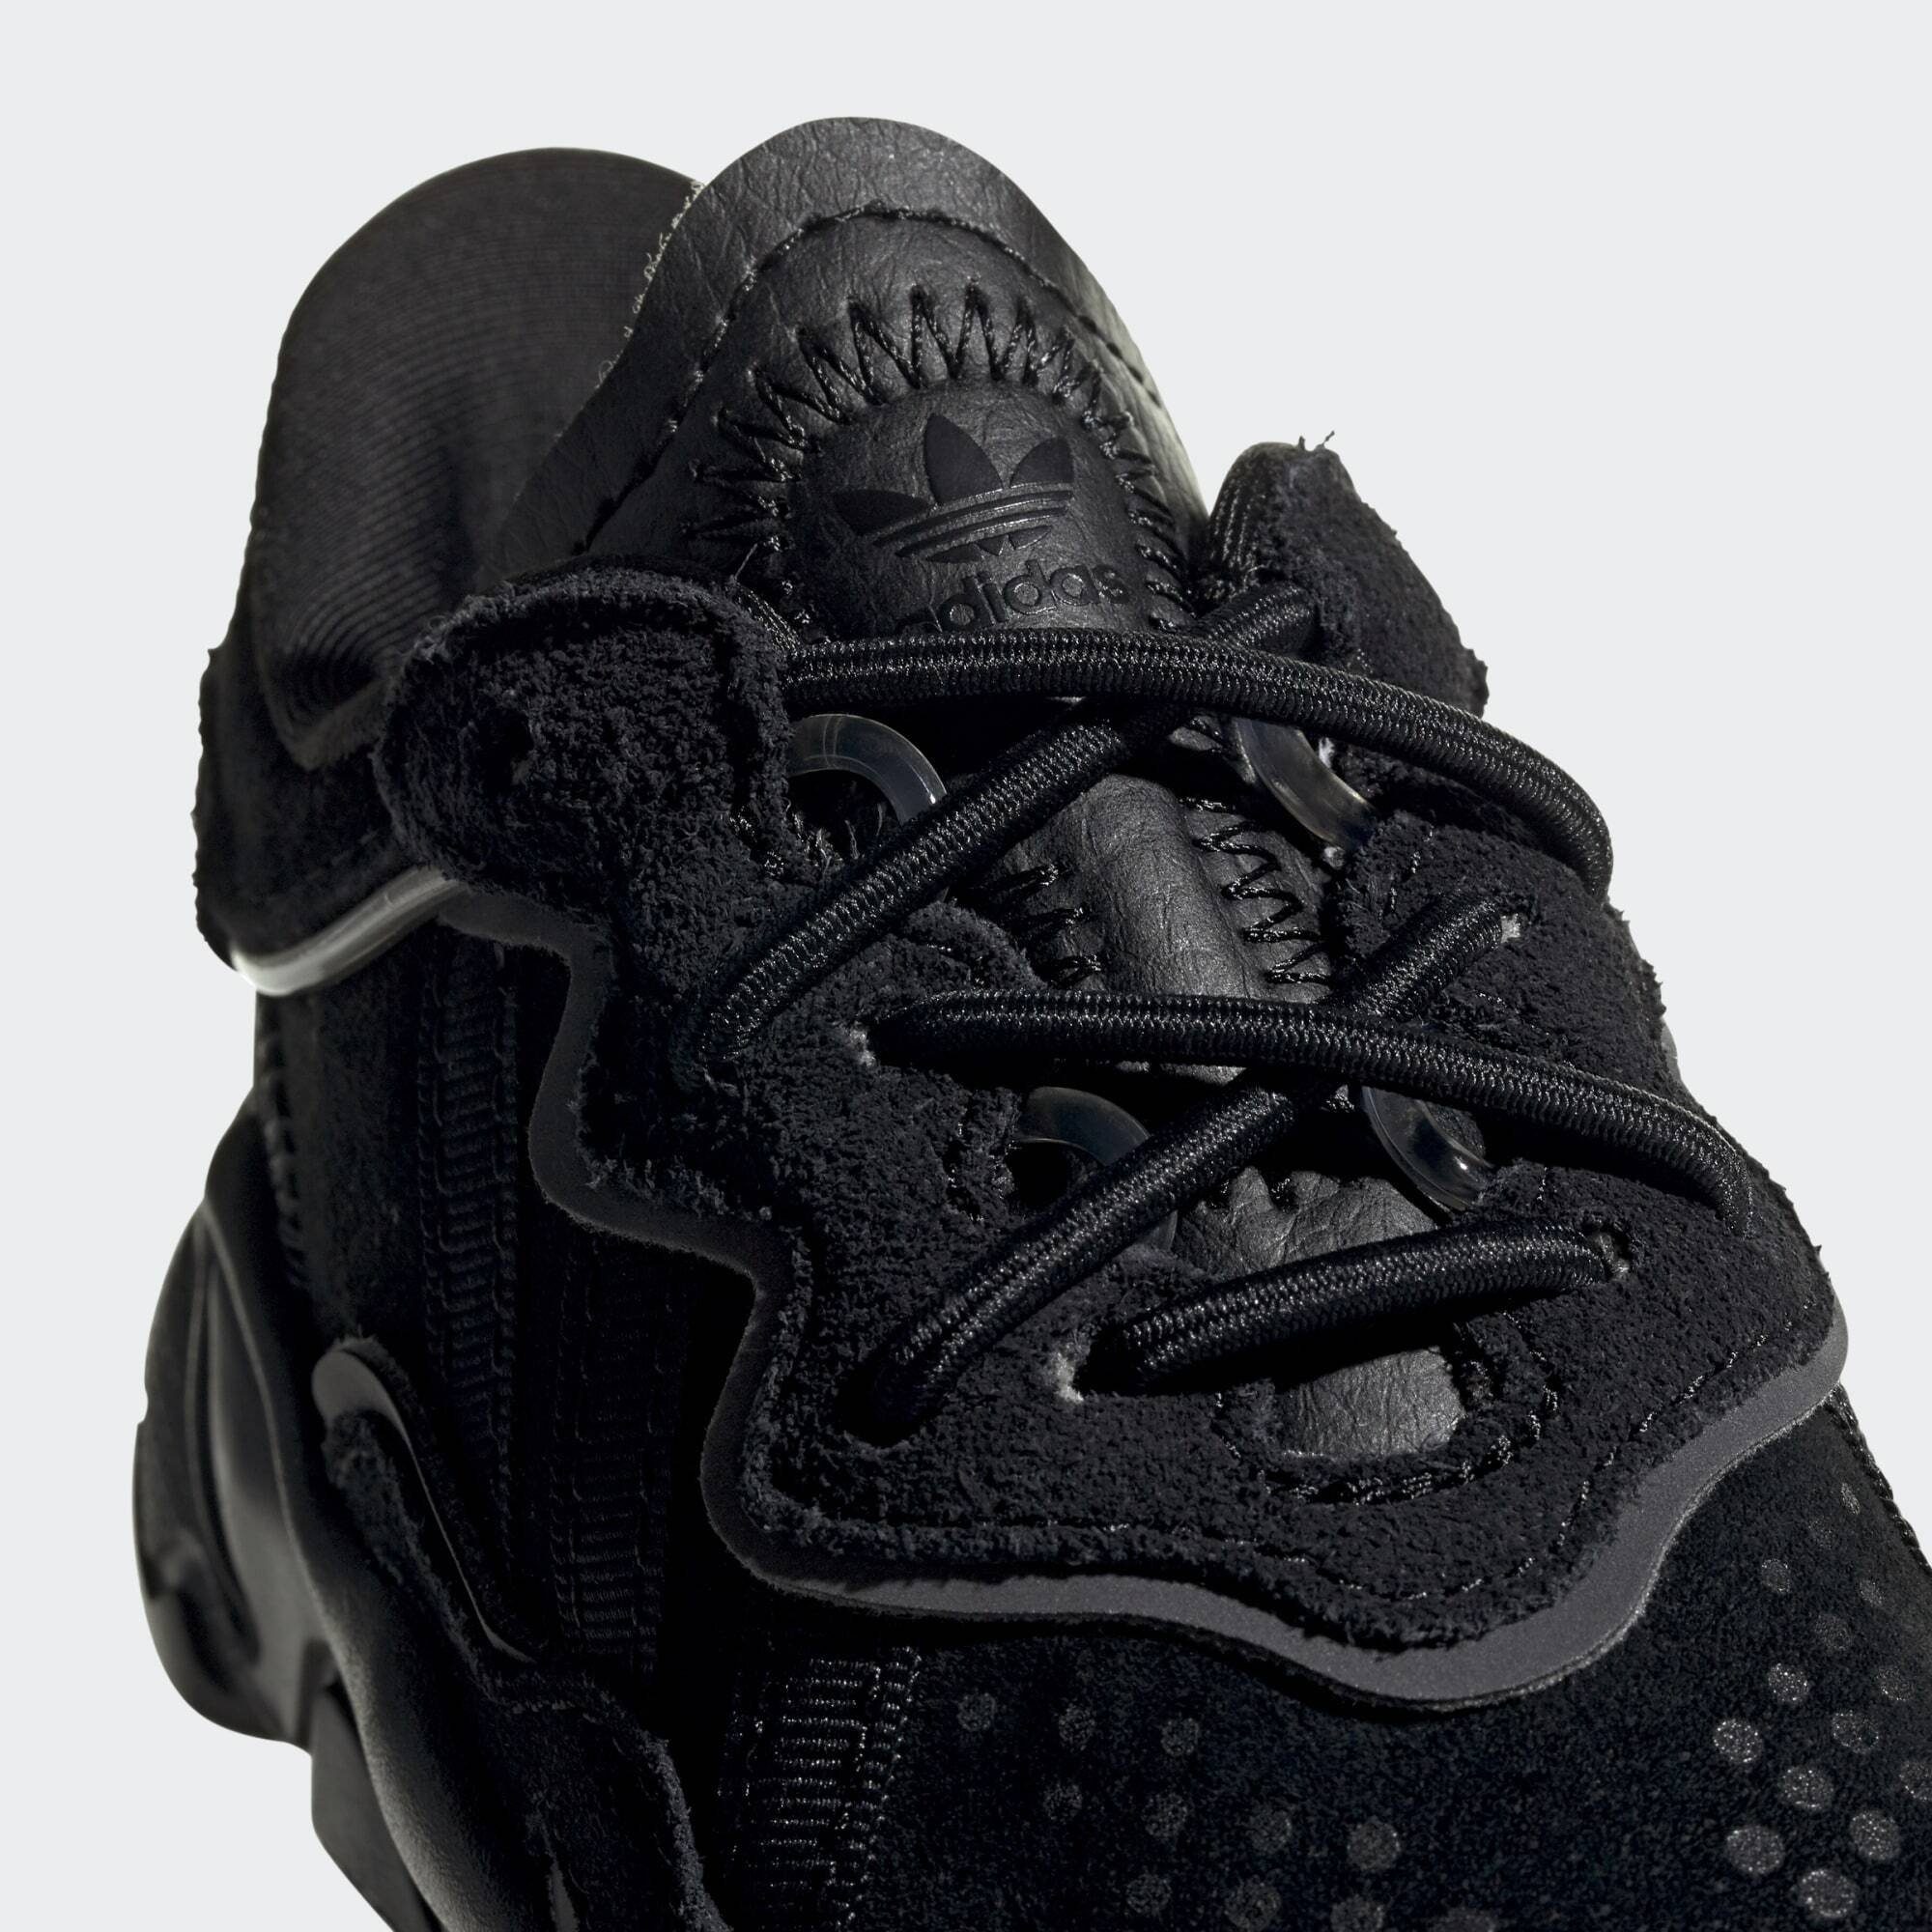 / Sneaker Core Black OZWEEGO SCHUH Metallic adidas / Core Originals Night Black